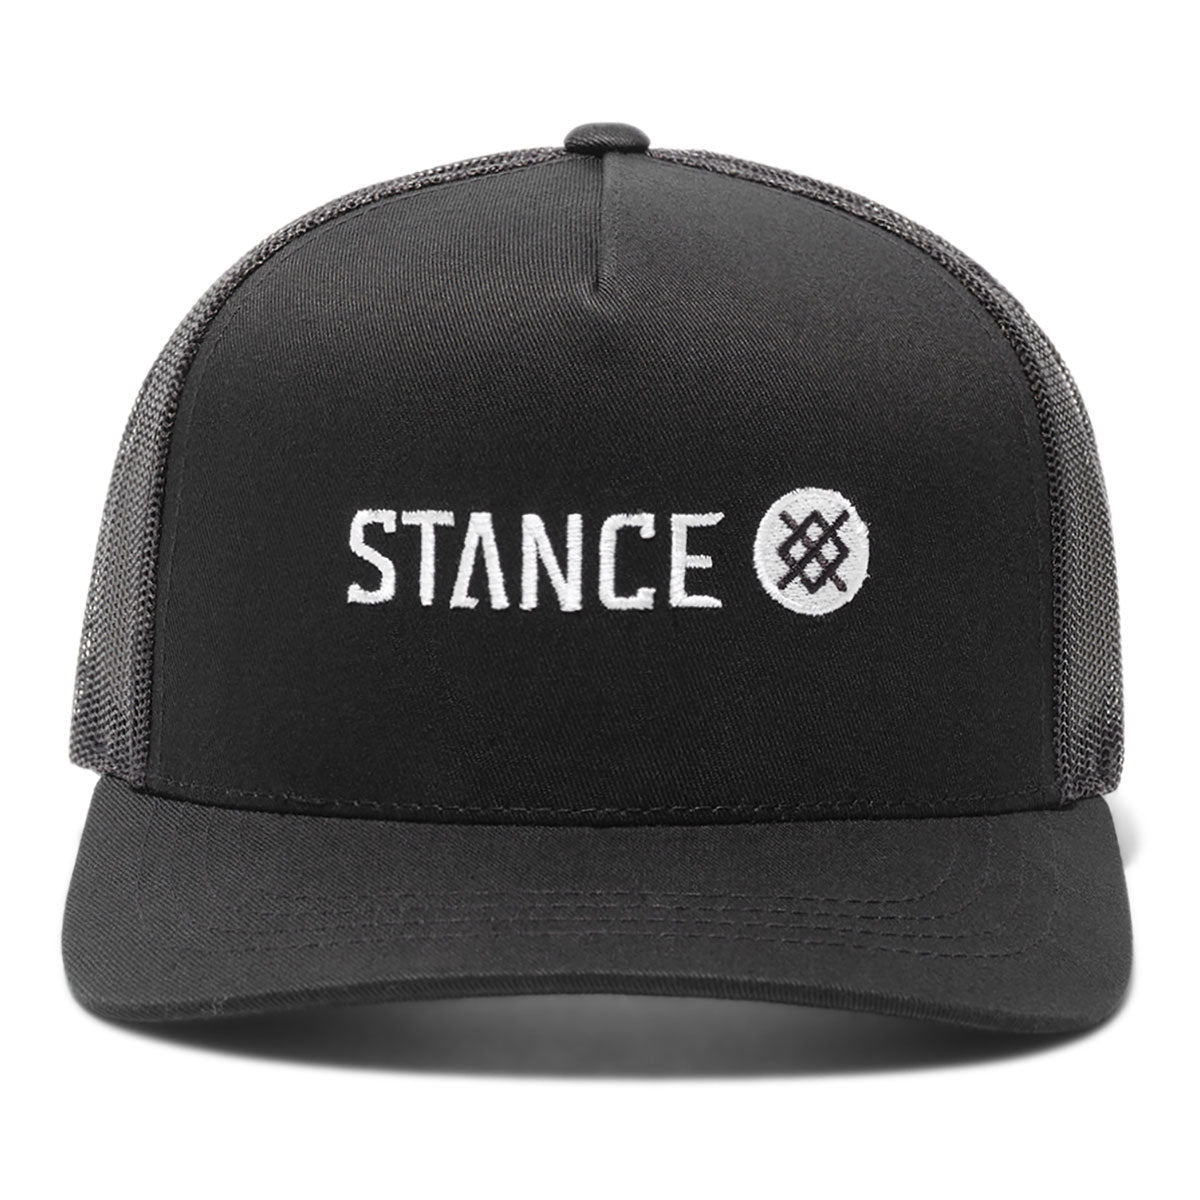 Stance Icon Trucker Hat - Black image 2